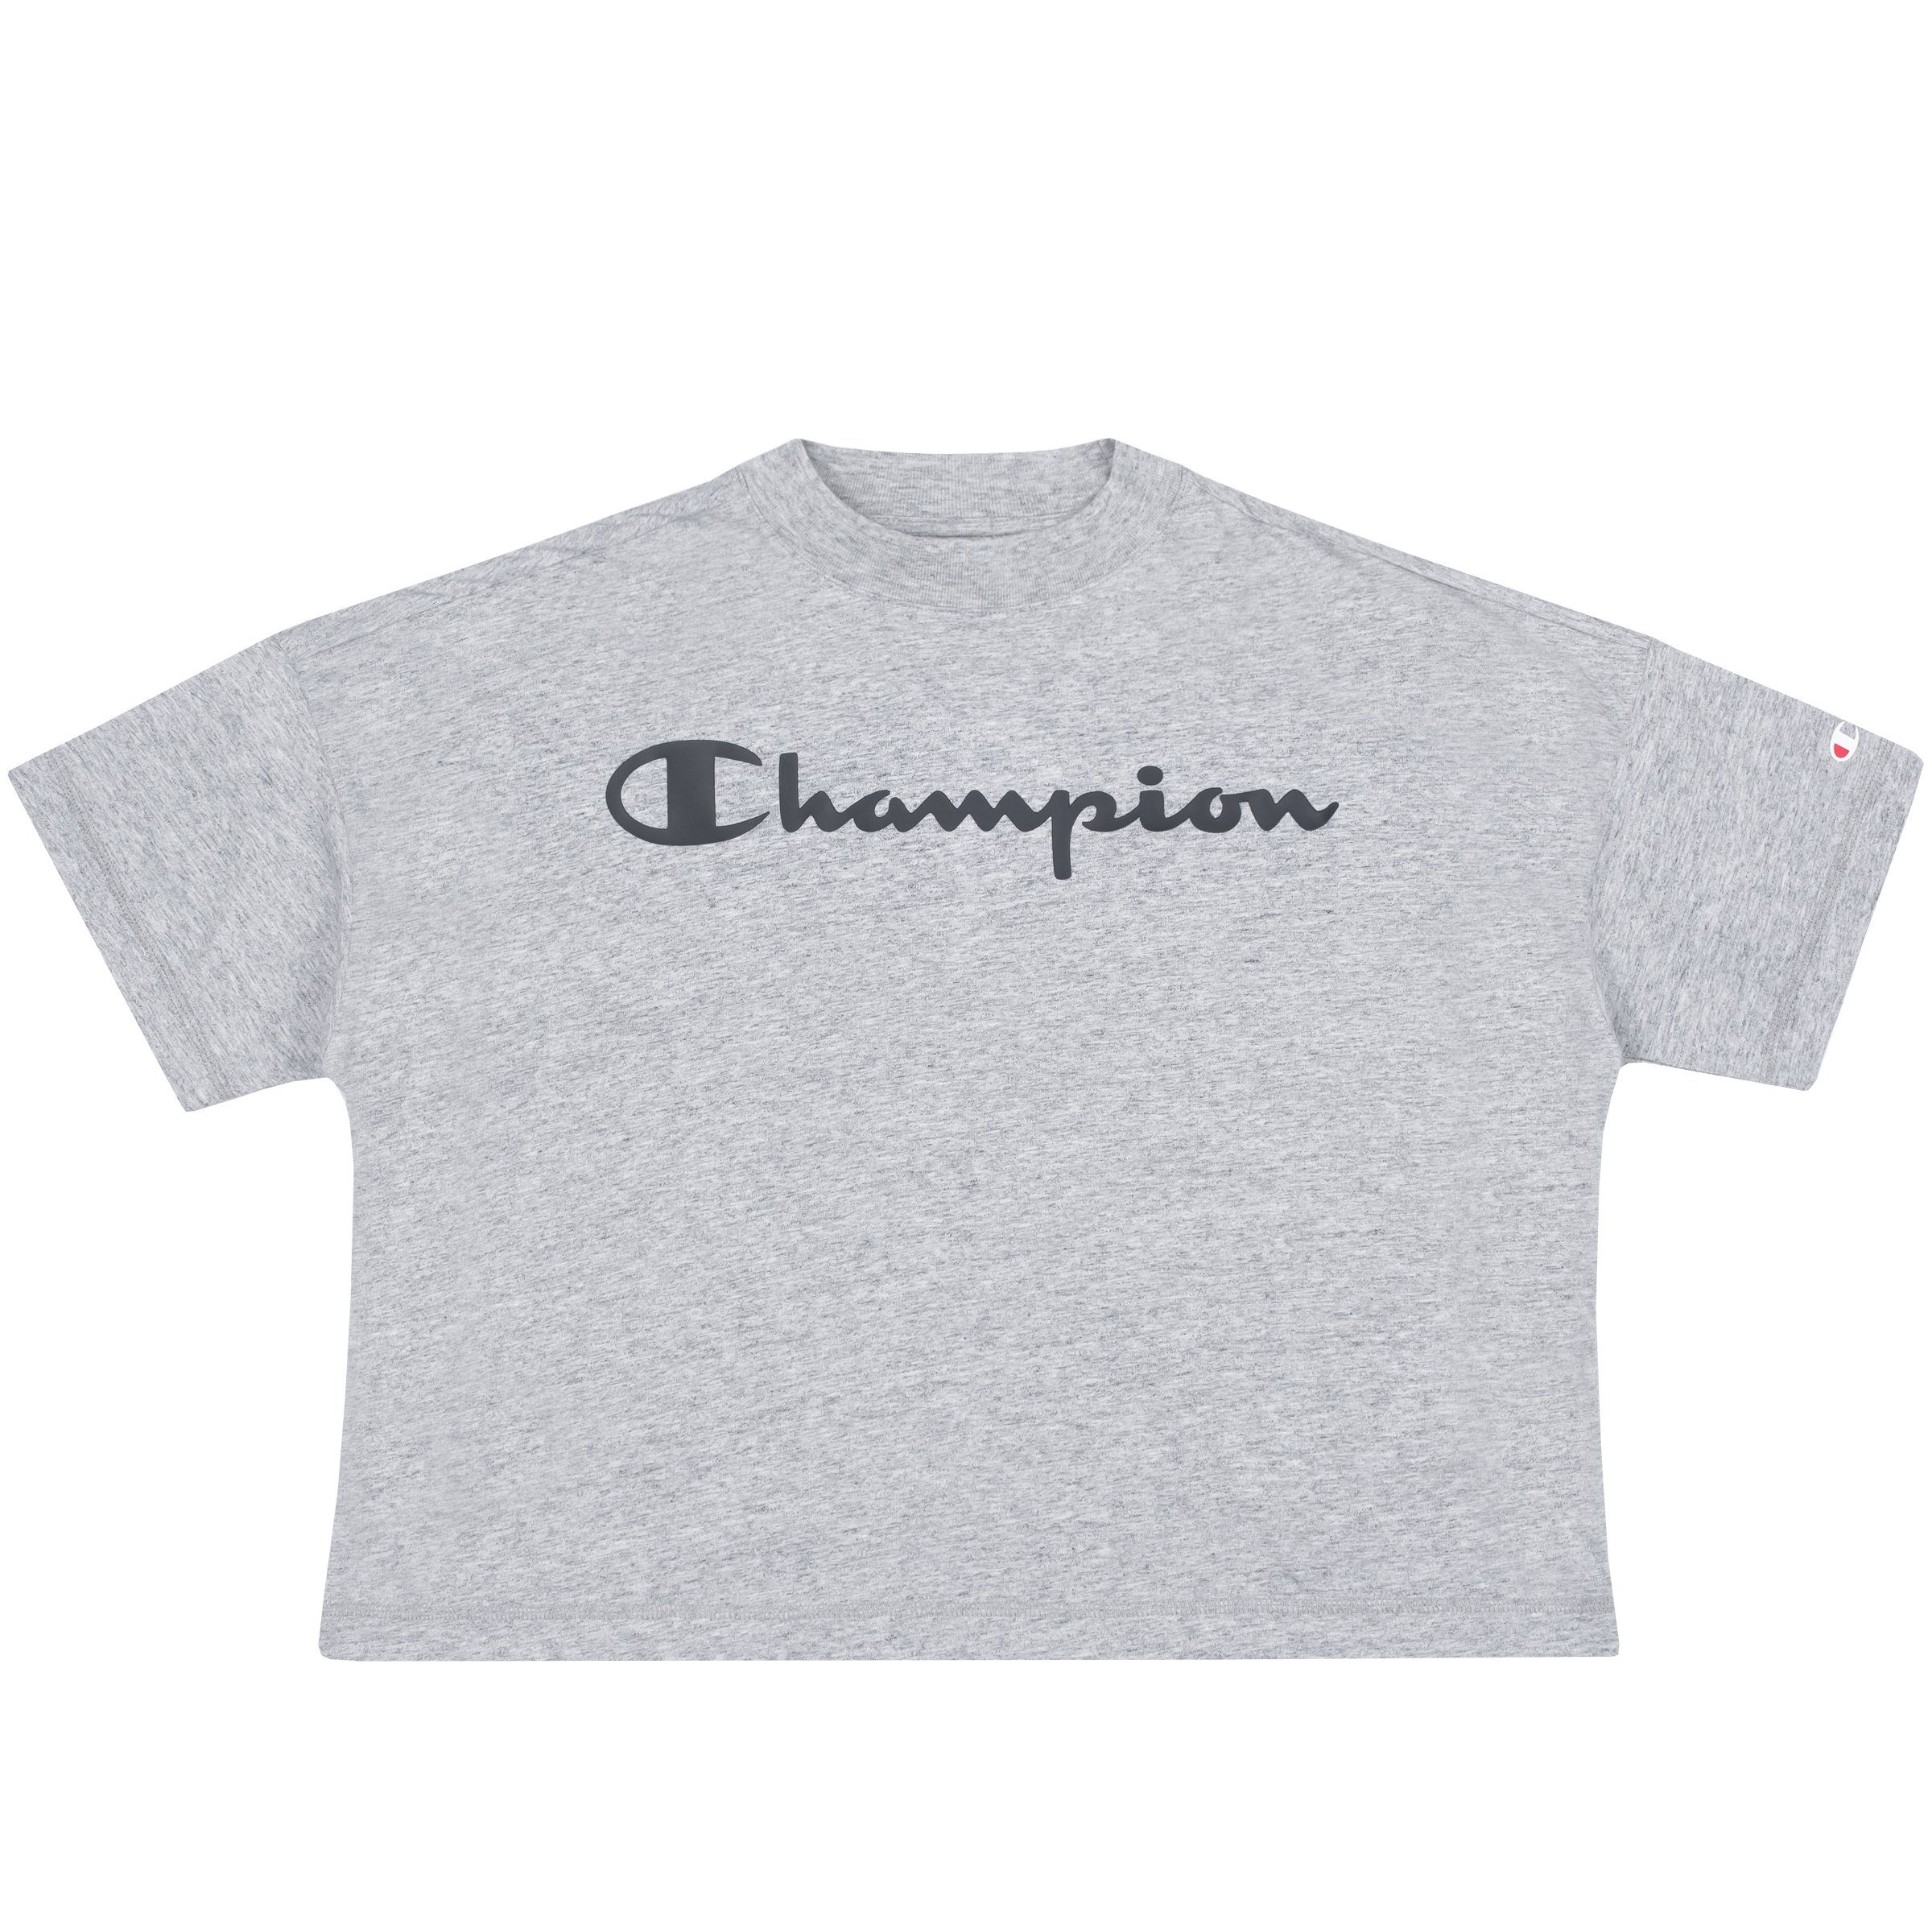 (noxm) Champion 113227 Damen Crop T-Shirt T-Shirt Adult Champion grau Top